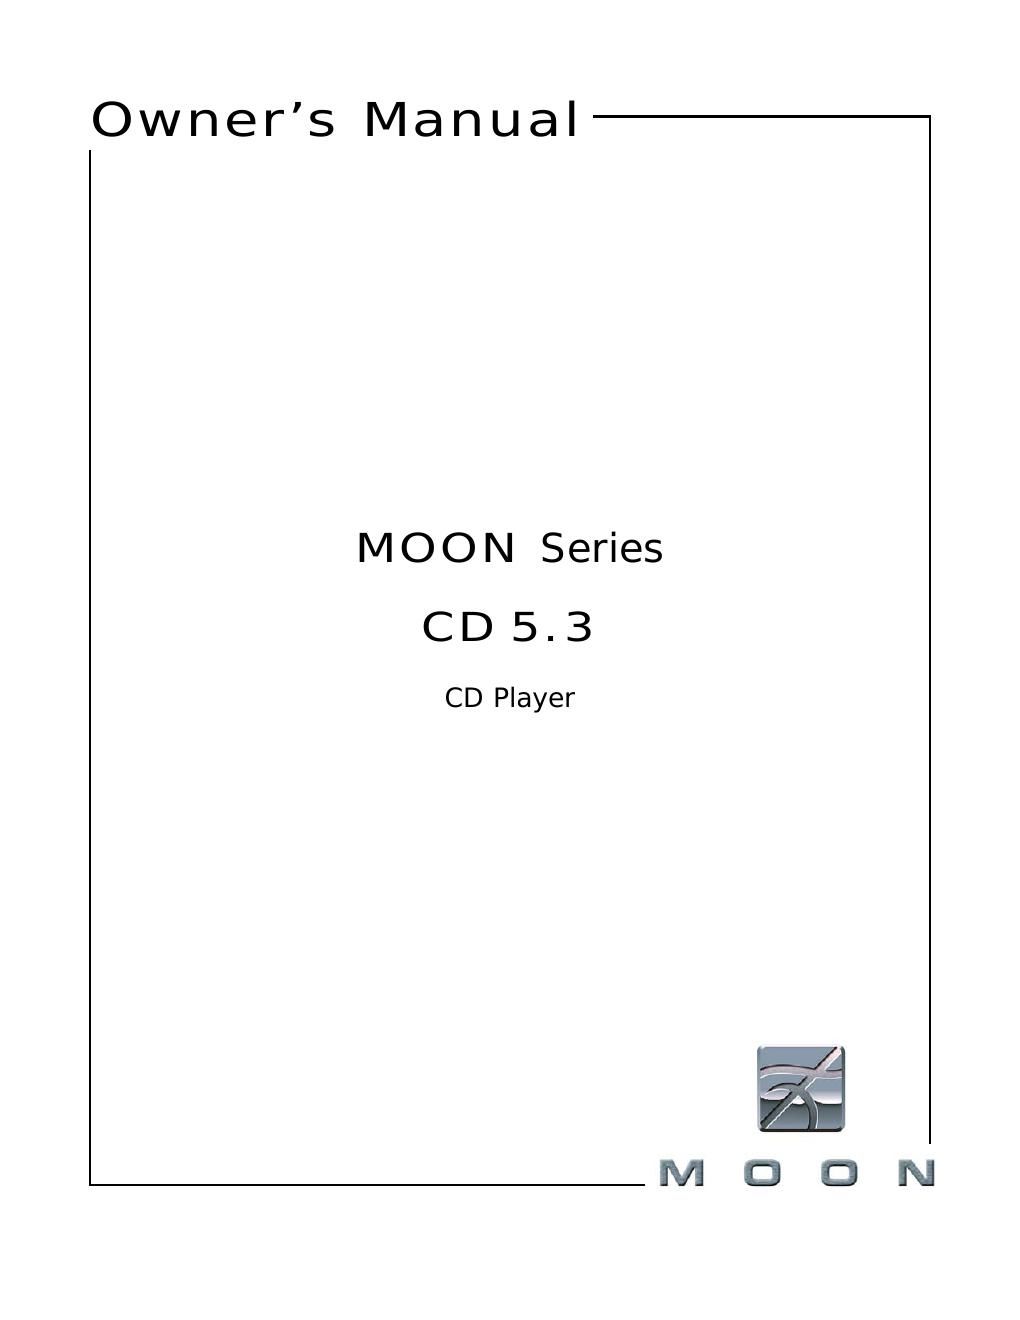 moon cd 5 3 owners manual